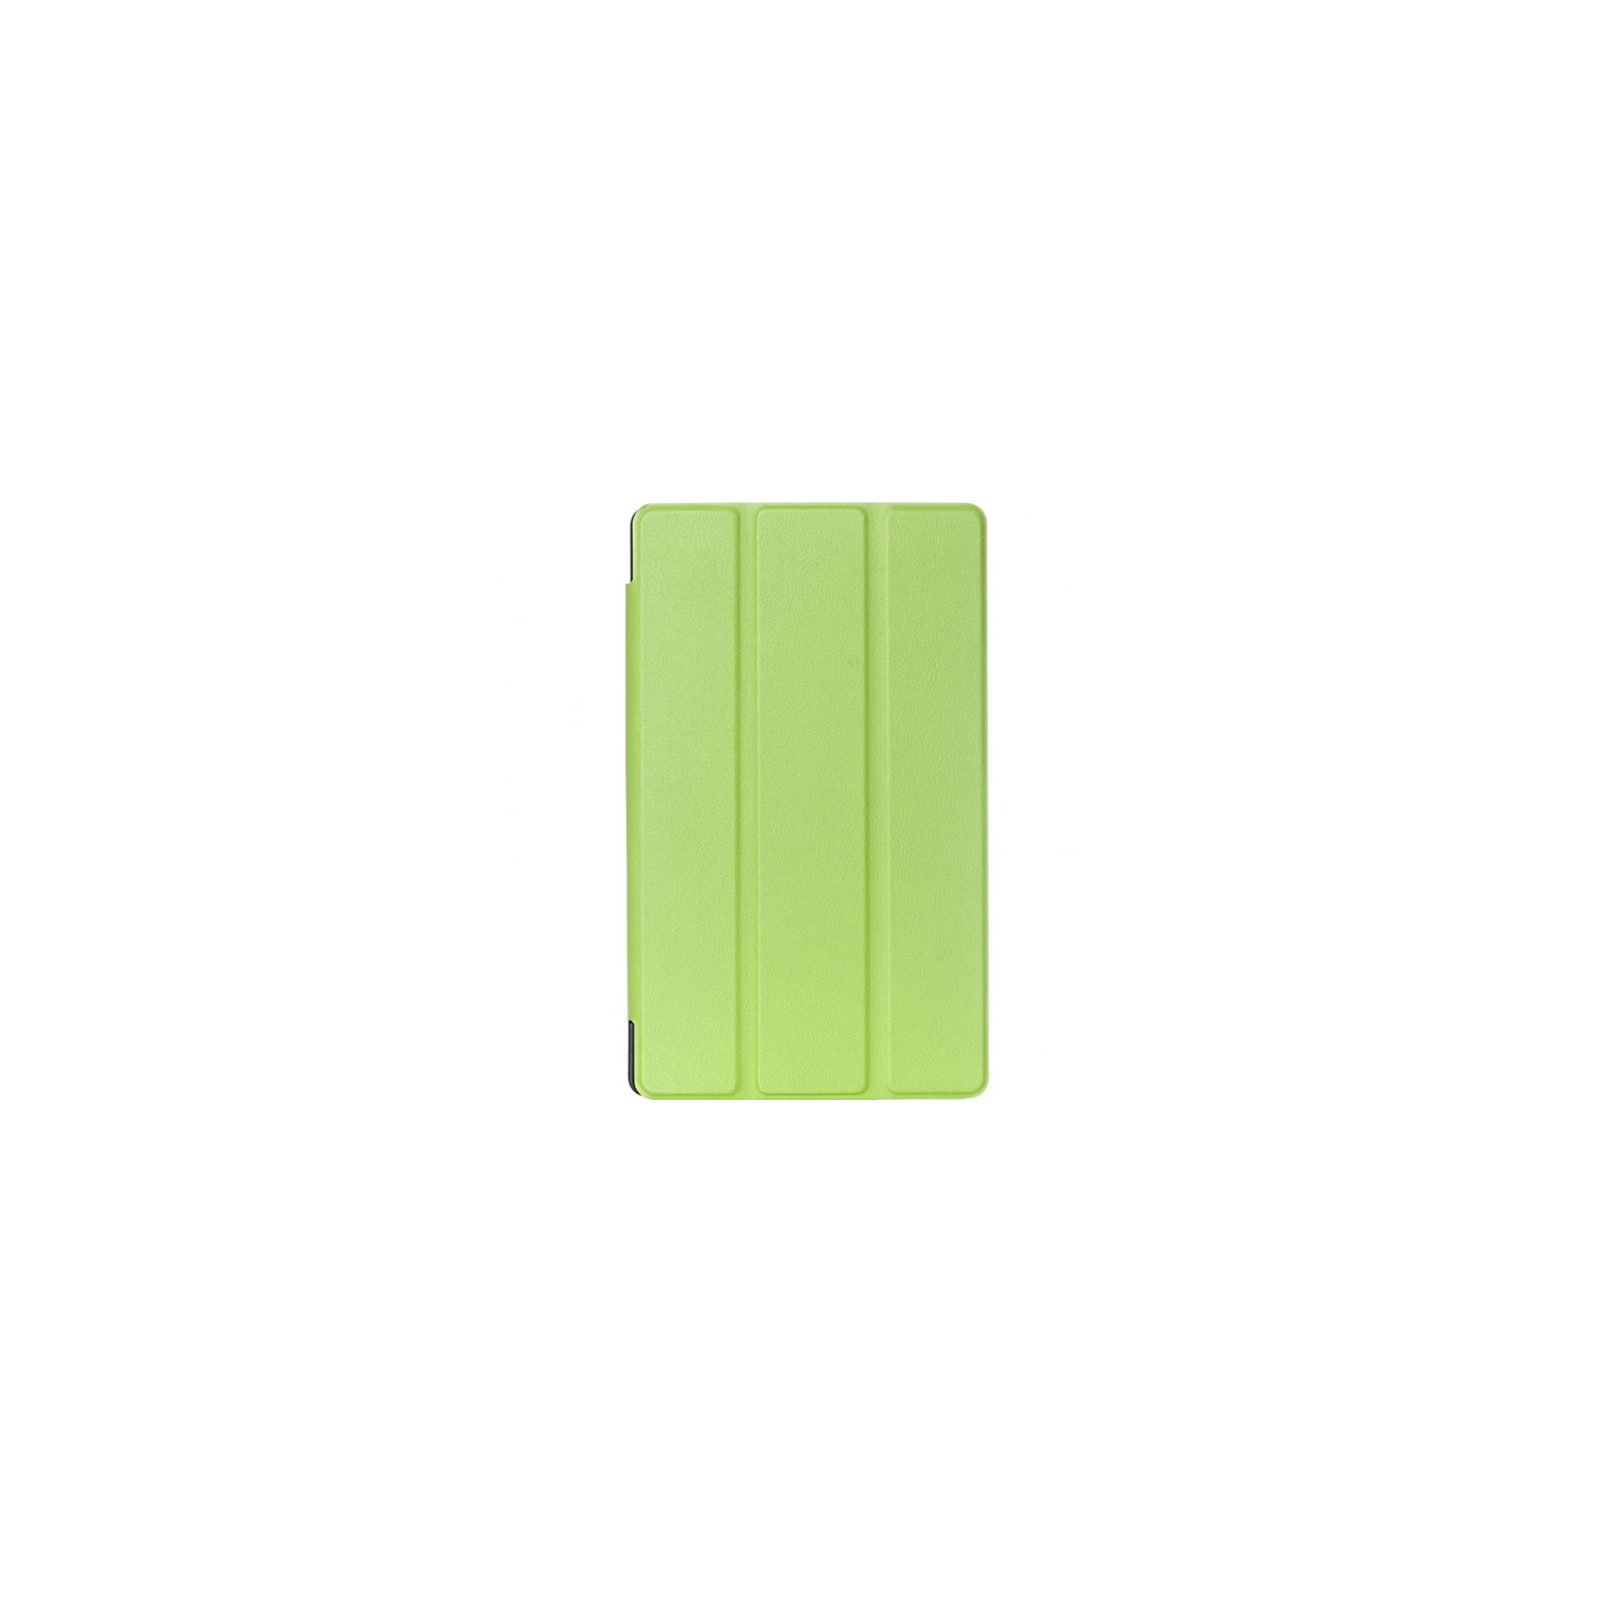 Чехол для планшета Grand-X для ASUS ZenPad 7.0 Z370 Green (ATC - AZPZ370G)